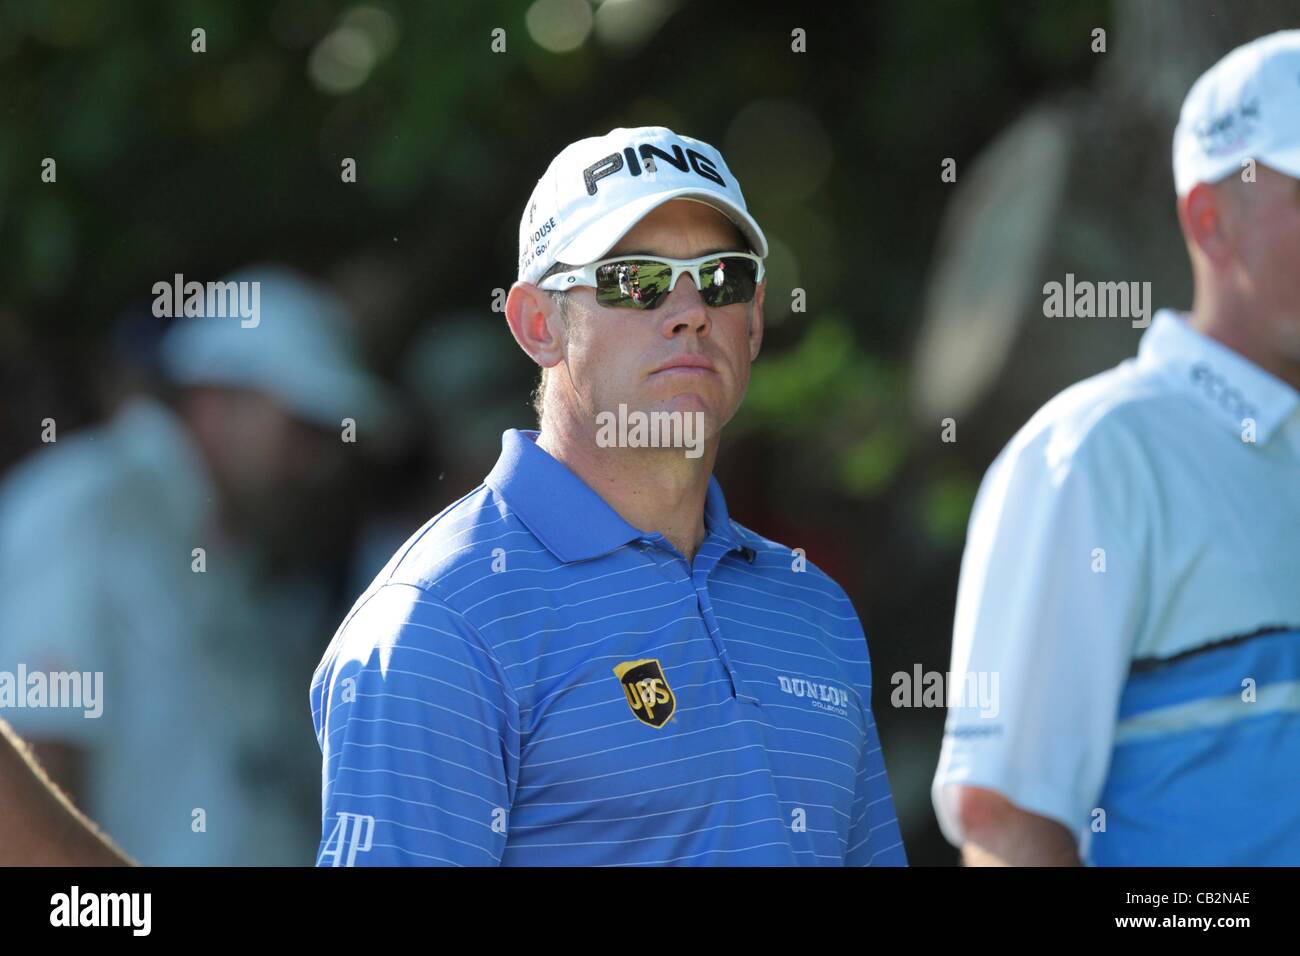 25.05.2012 Wentworth, Inghilterra. Lee Westwood (ITA) guardando pensieroso durante il BMW PGA Championship. Foto Stock